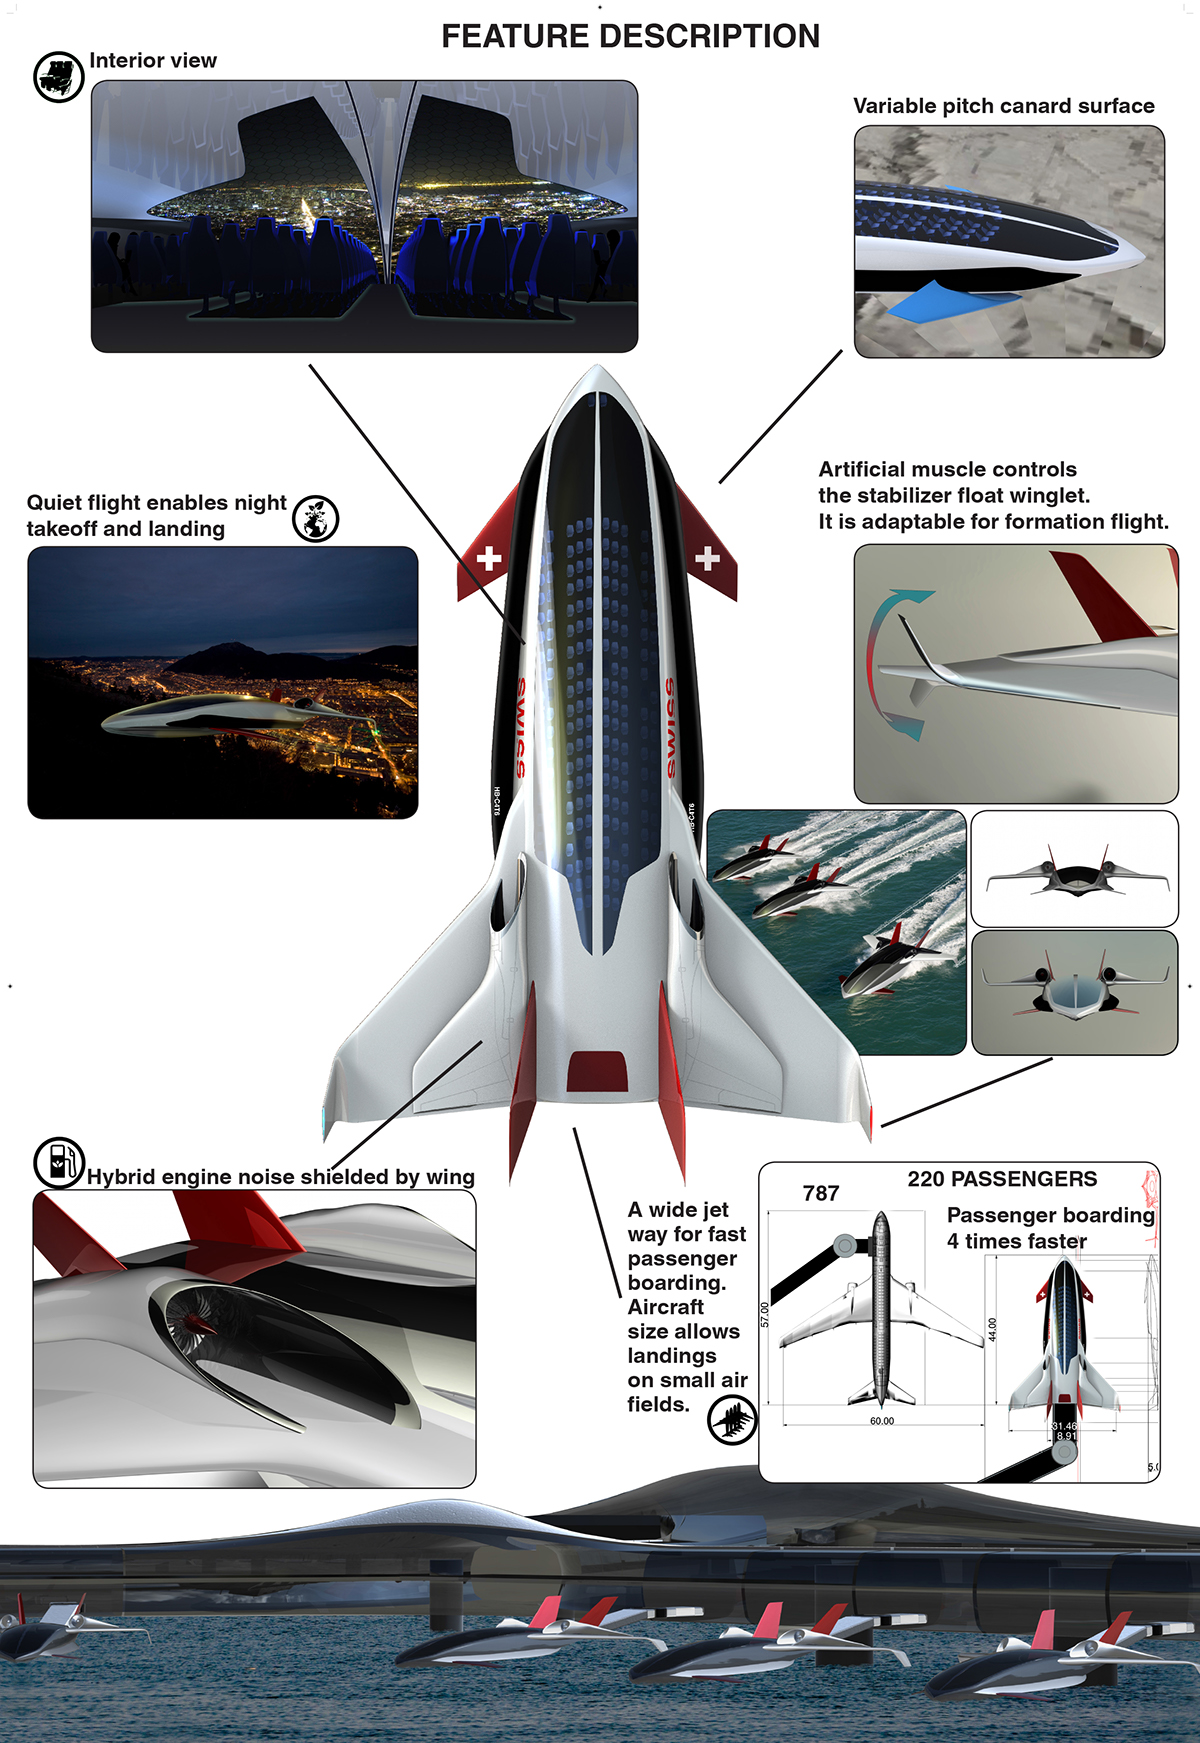 shabtai design concept aviation transportation hirshberg future flight commercial air travel Aircraft airplane